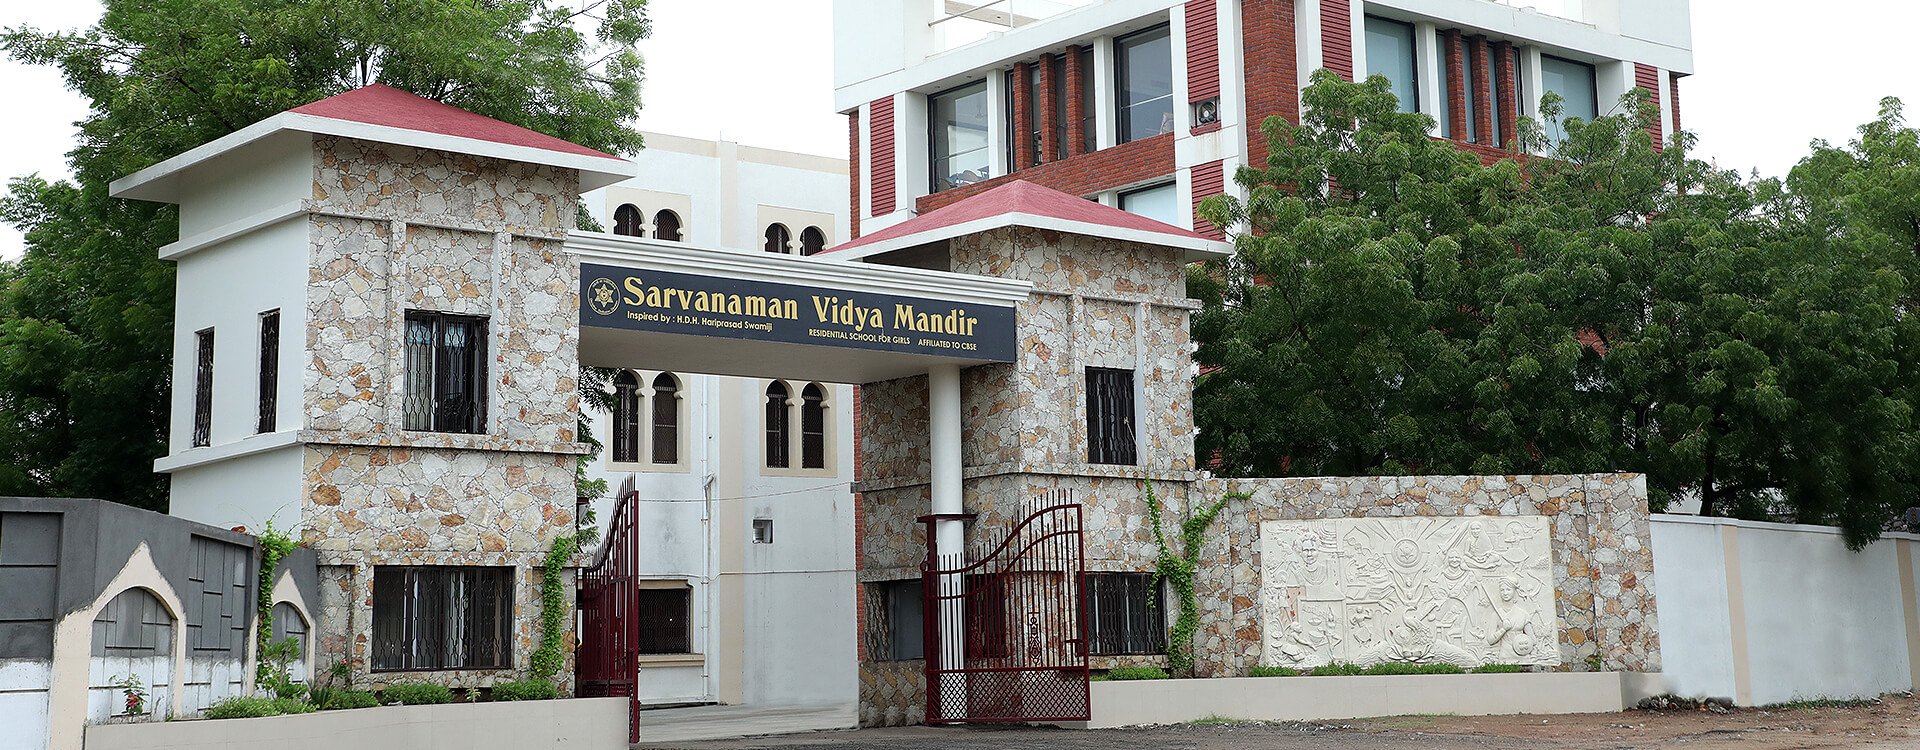 Sarvanaman Vidya Mandir|Schools|Education